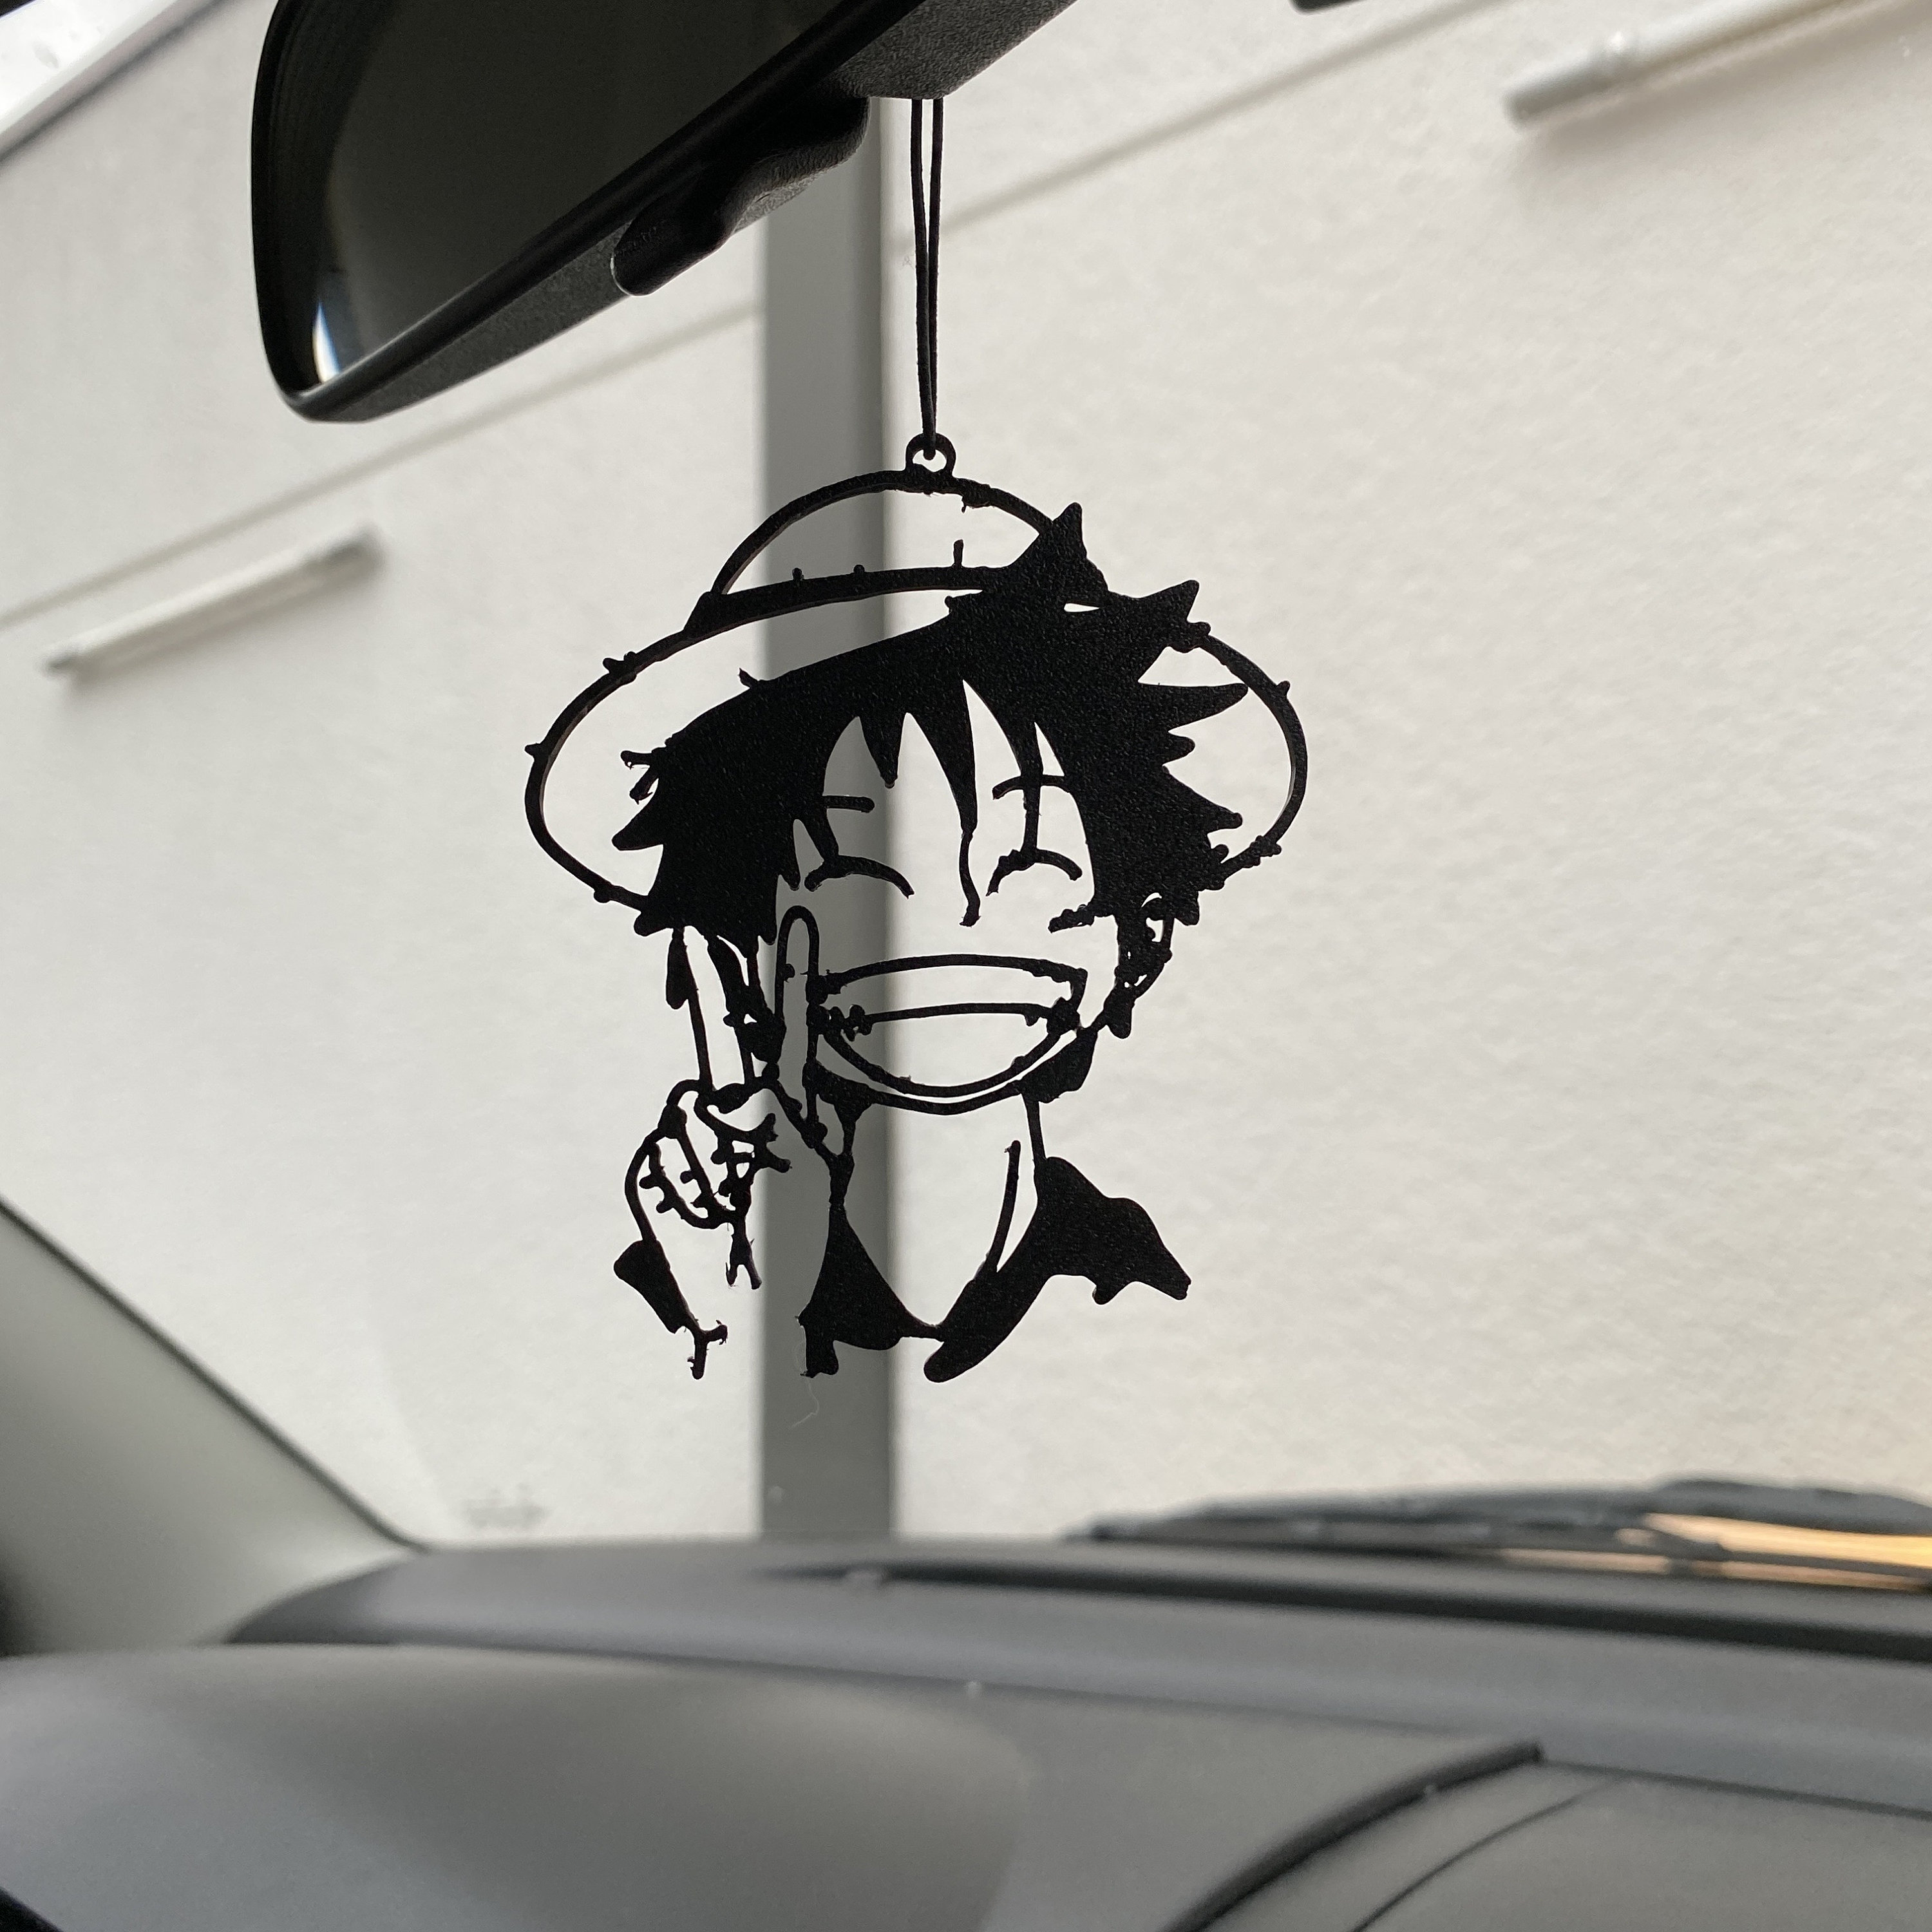 Anime car accessories -  France